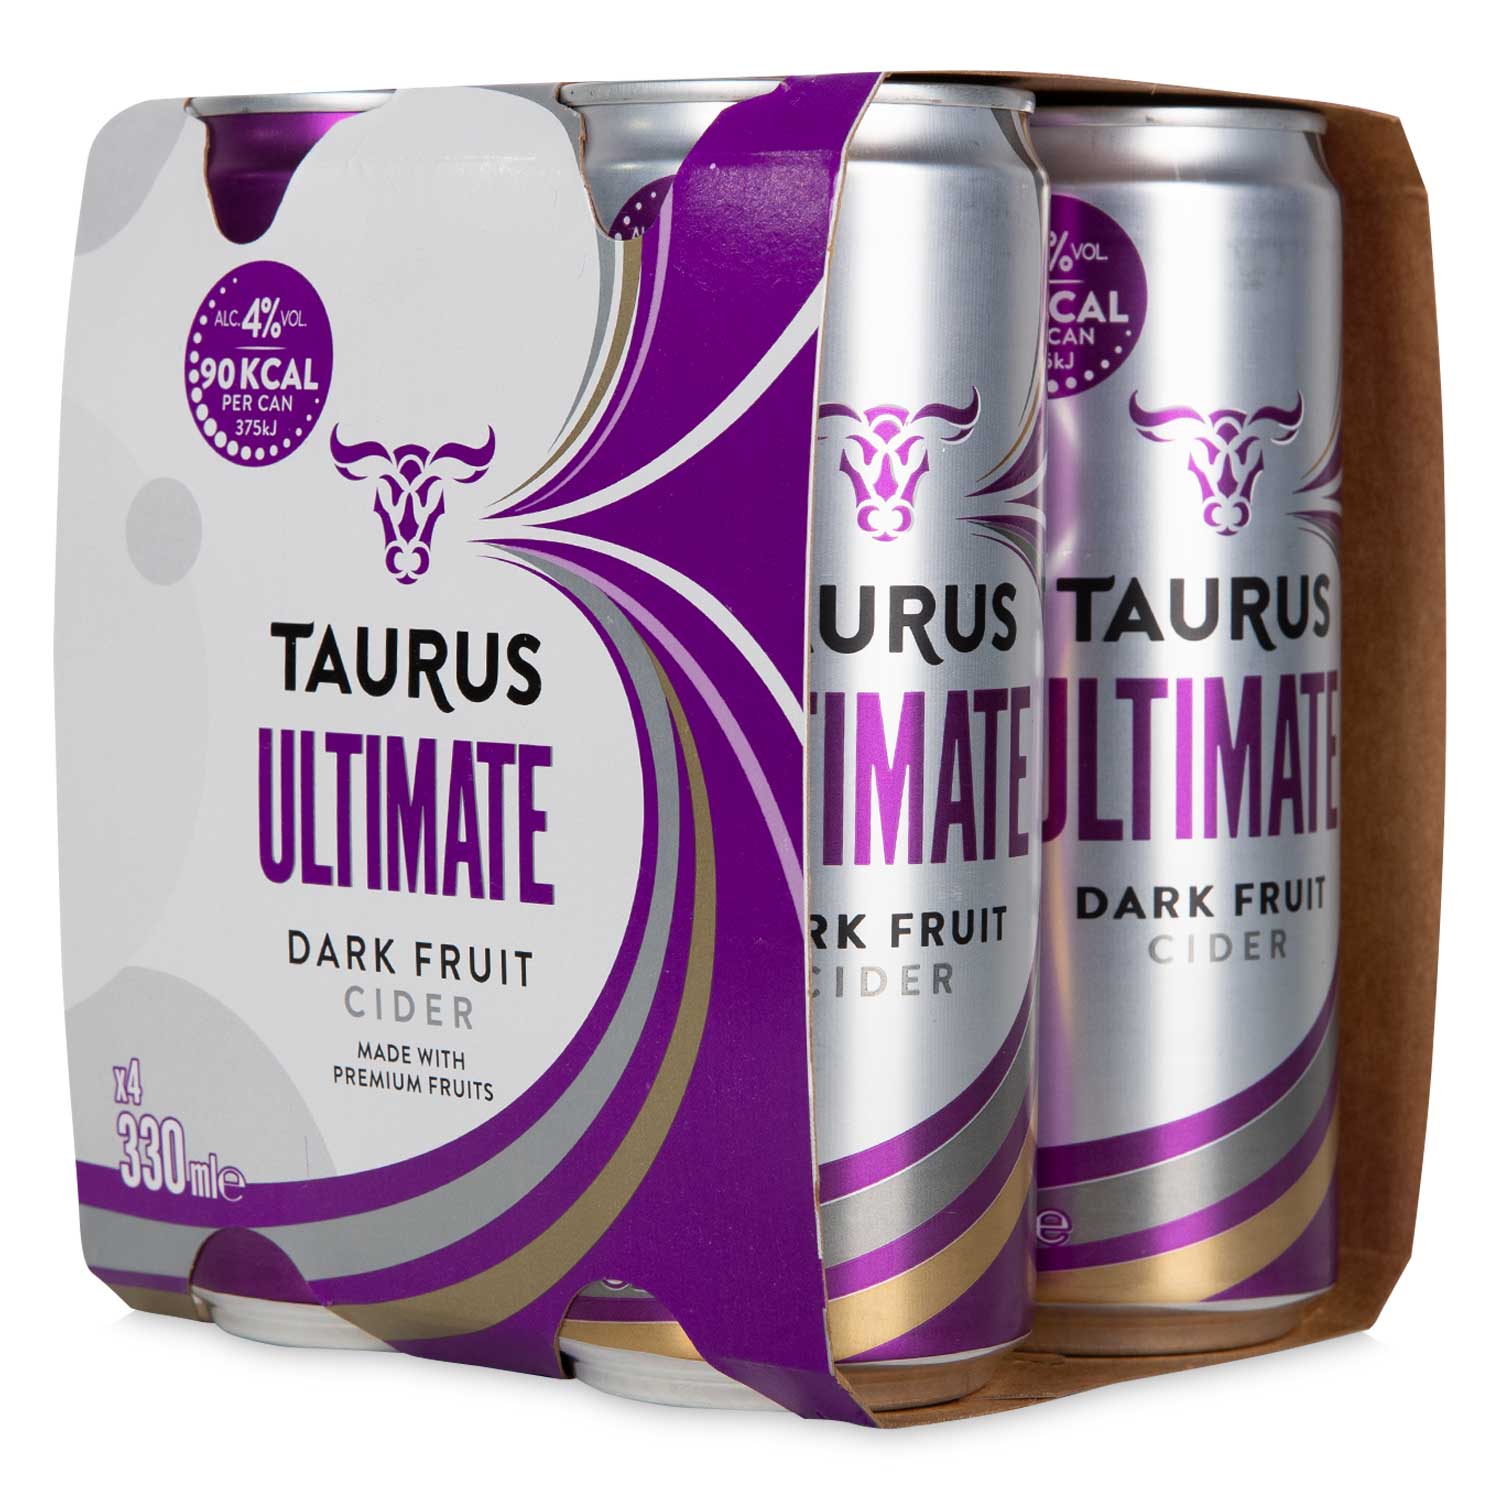 Taurus Ultimate Dark Fruit Cider 4x330ml